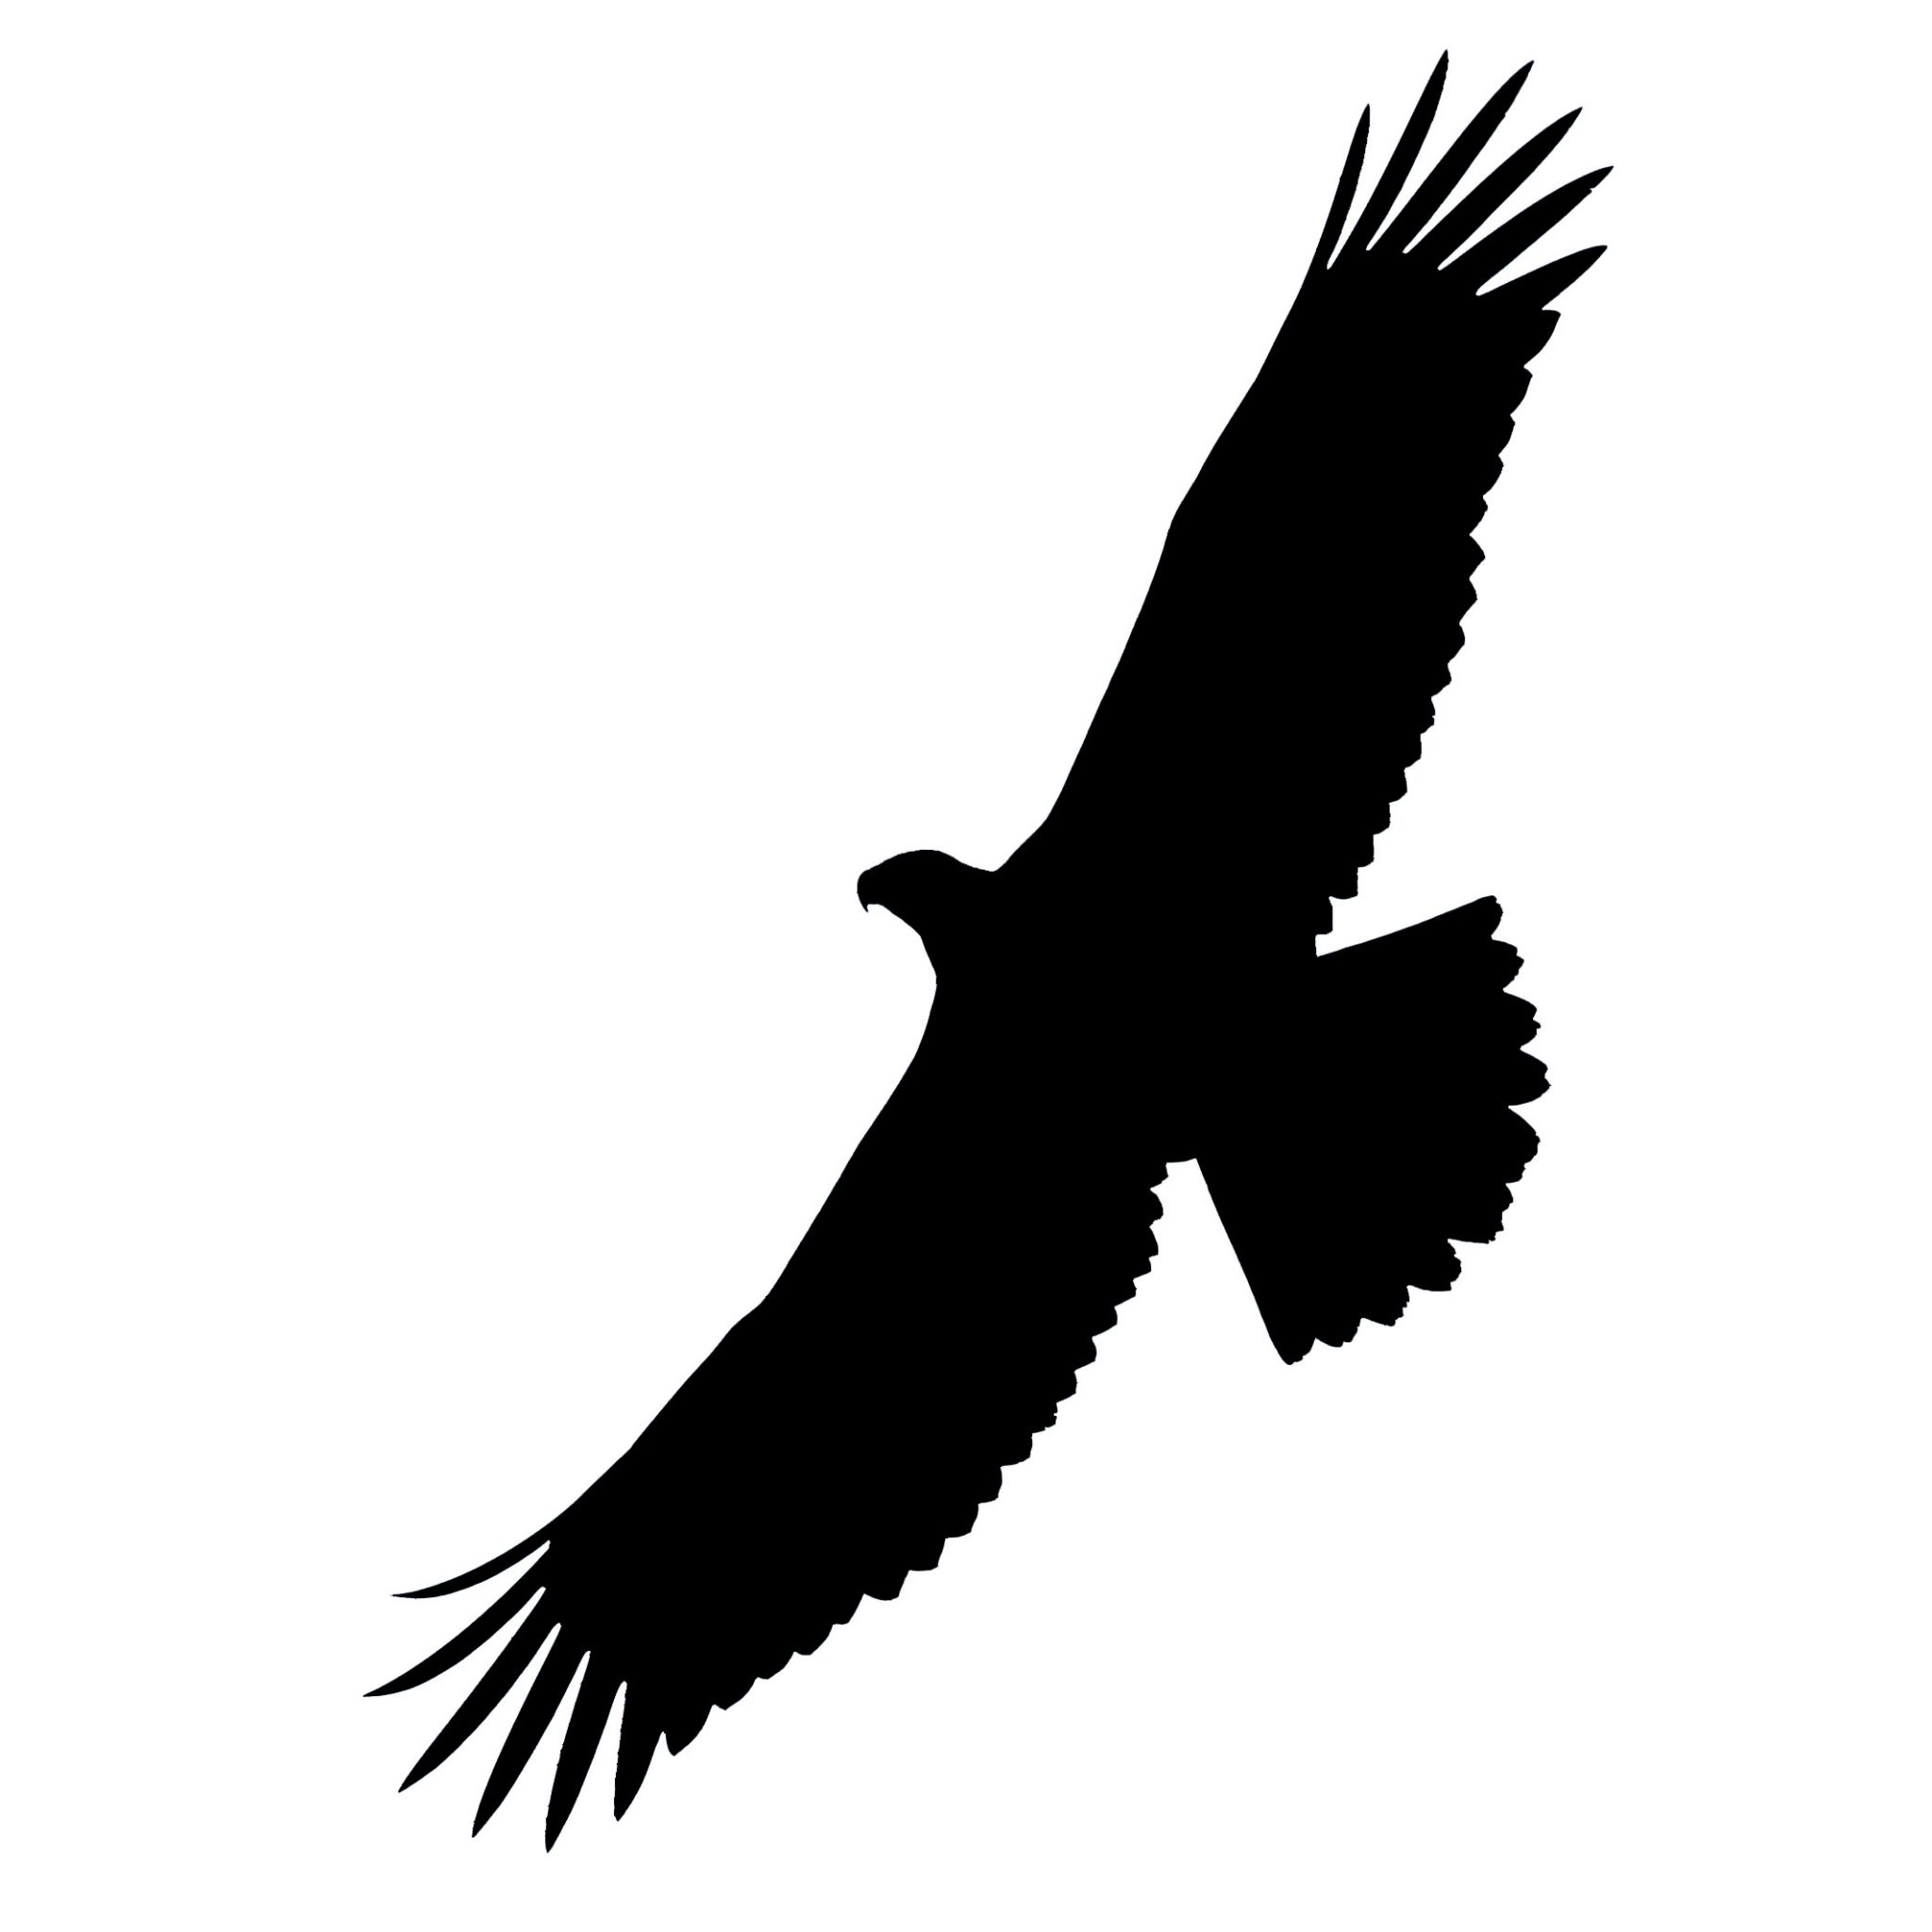 Bald Eagle juvenile flying Seneca Co, NY 17Jun12 kjm_9704-1122